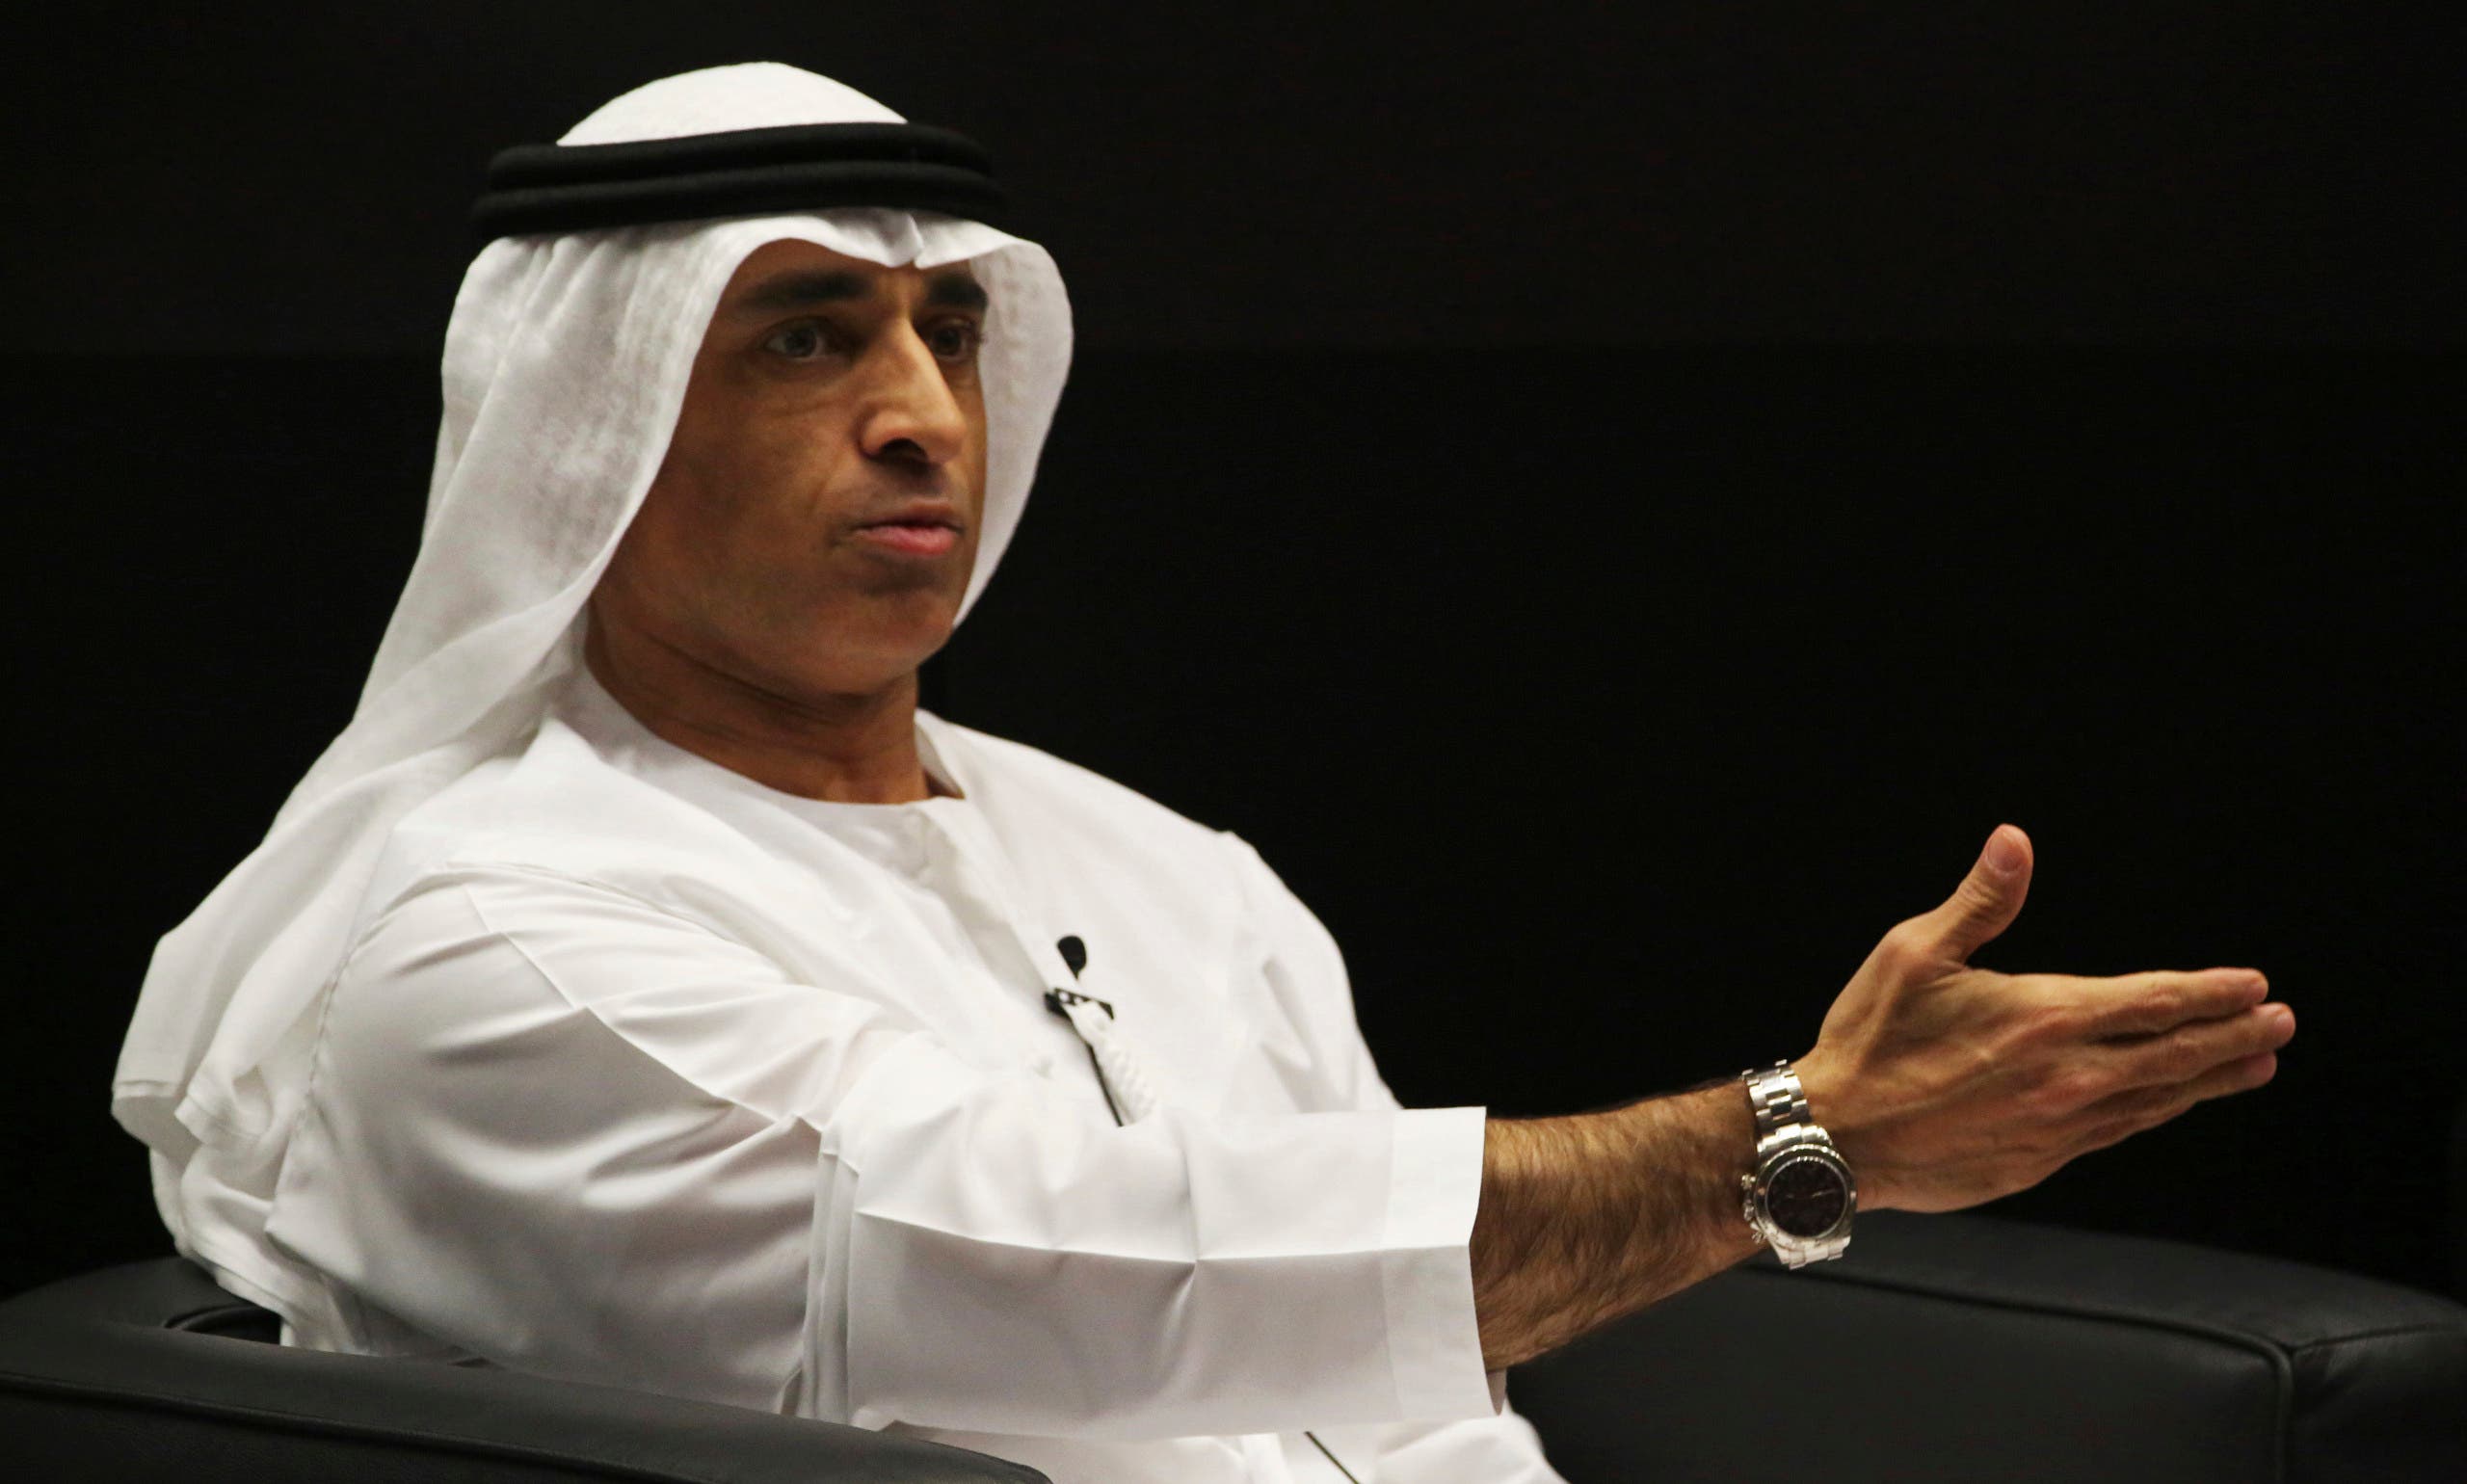 Emirati Ambassador to the US Yousef al-Otaiba gestures during an event in Abu Dhabi, United Arab Emirates on Jan. 25, 2018. (AP)